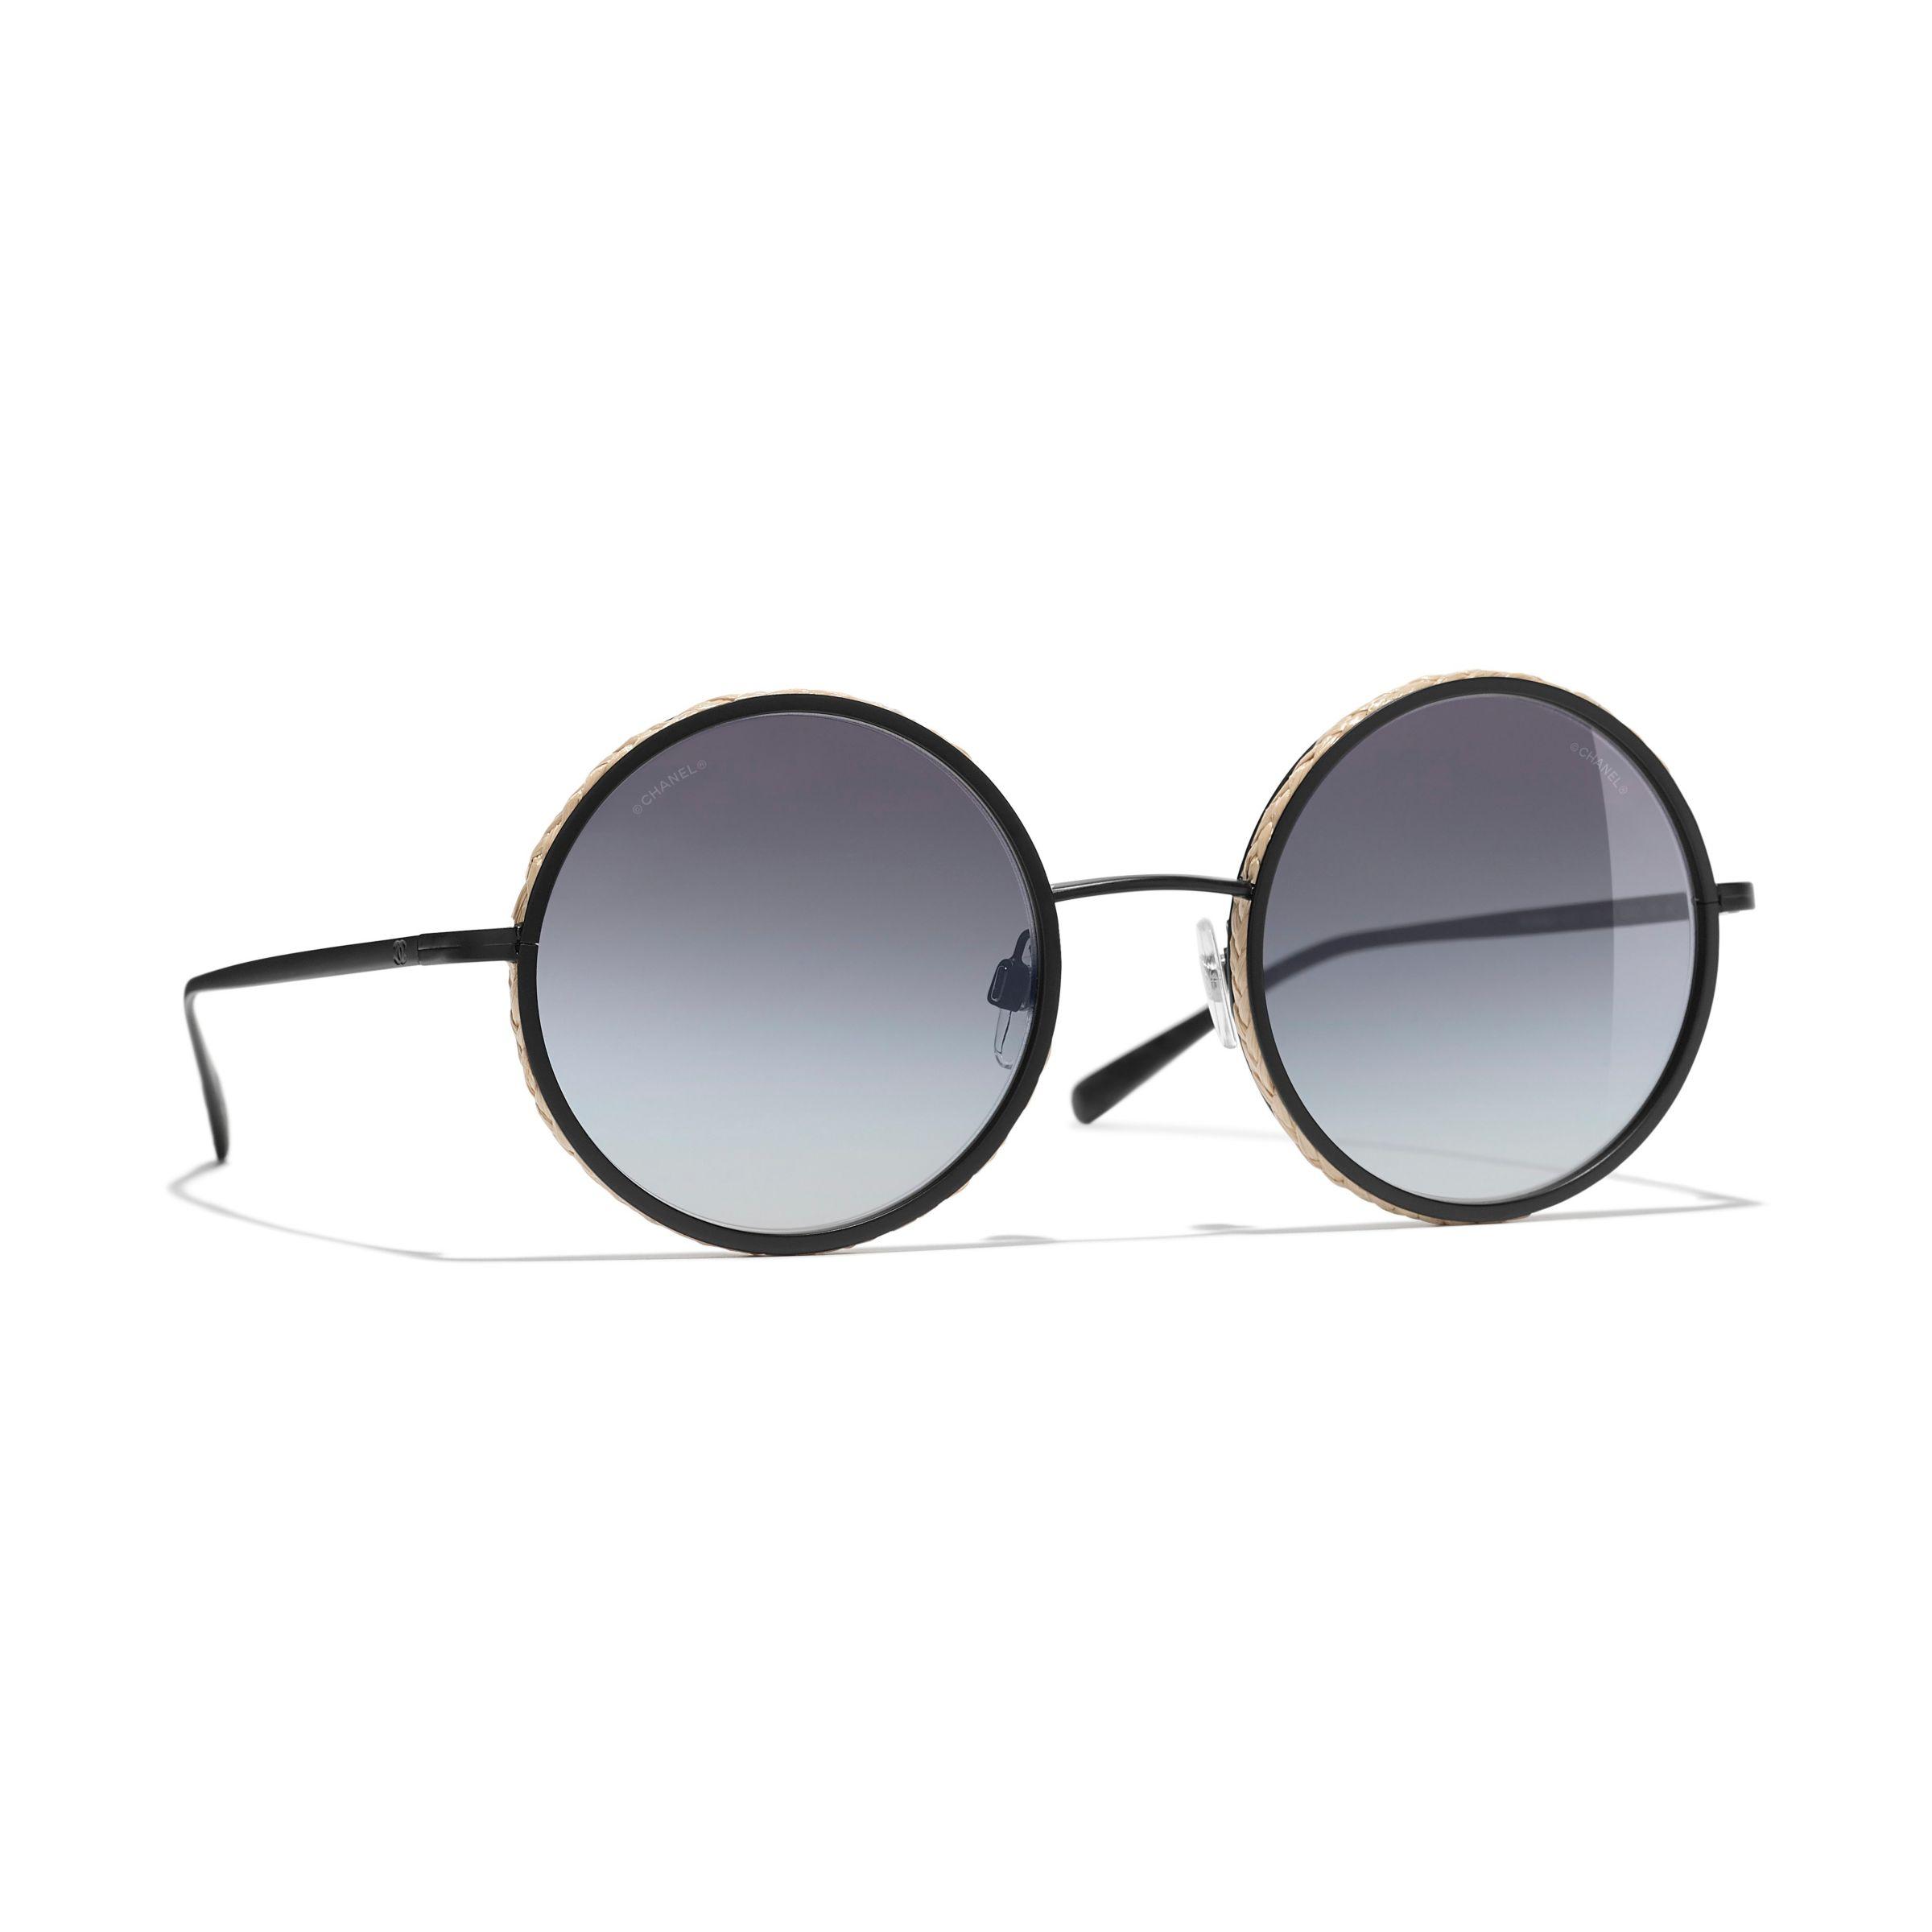 Chanel Round Sunglasses Ch4250 Black/grey Gradient in Blue